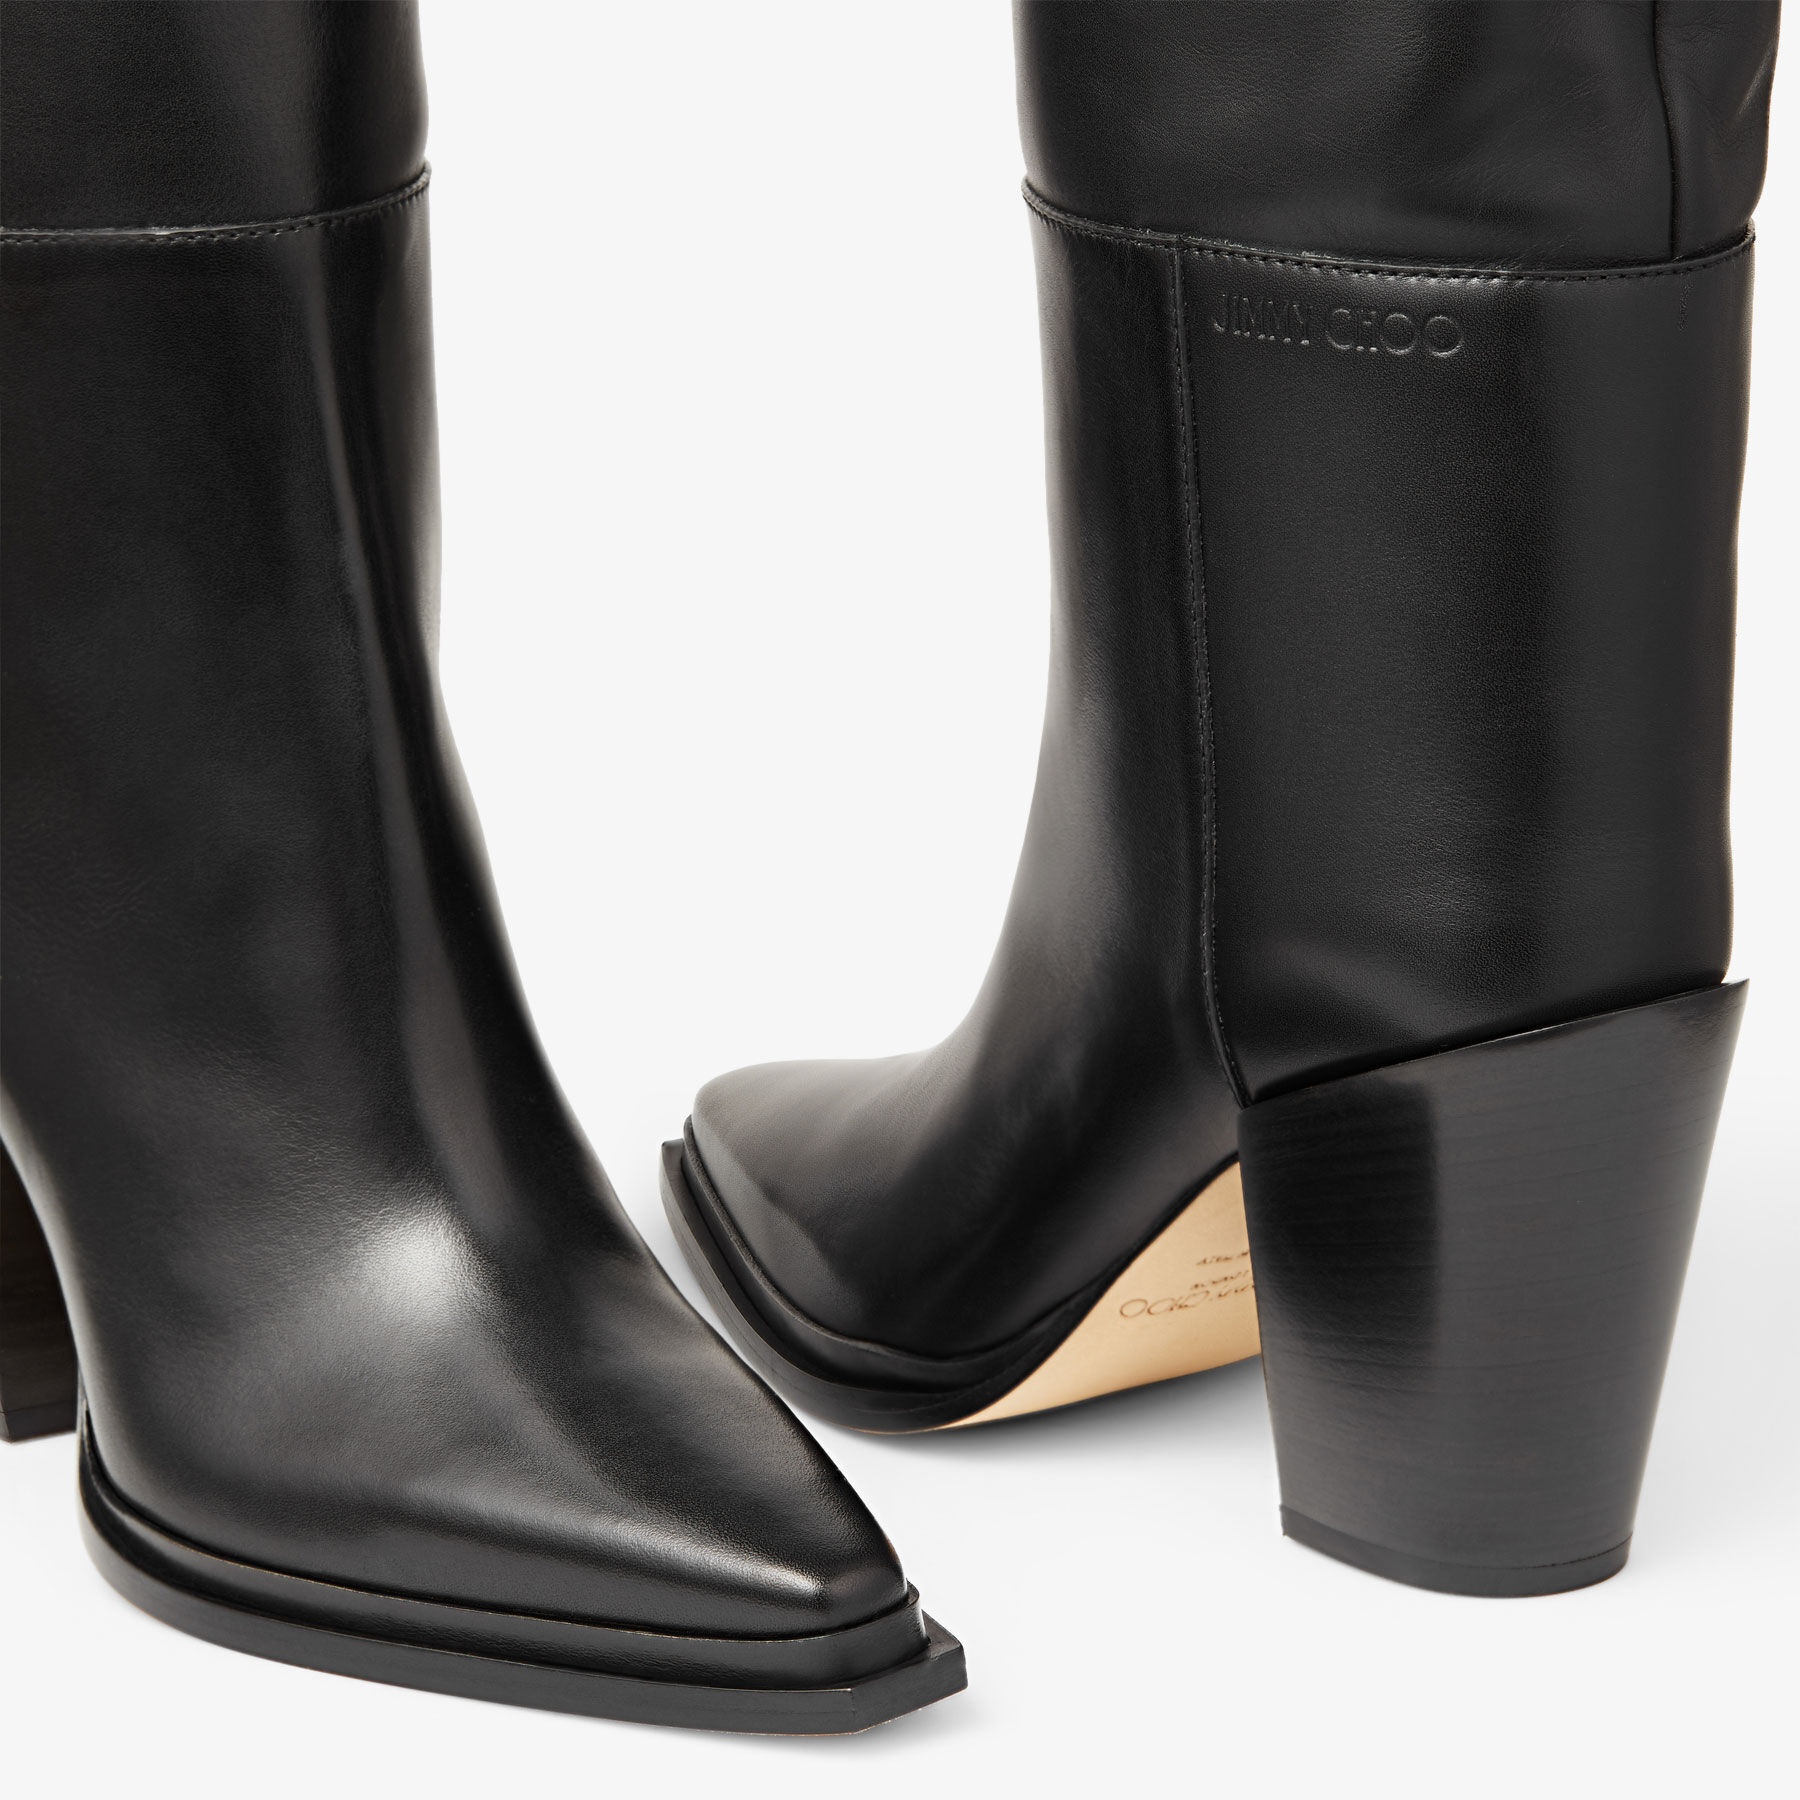 Cece 80
Black Soft Calf Leather Boots - 4